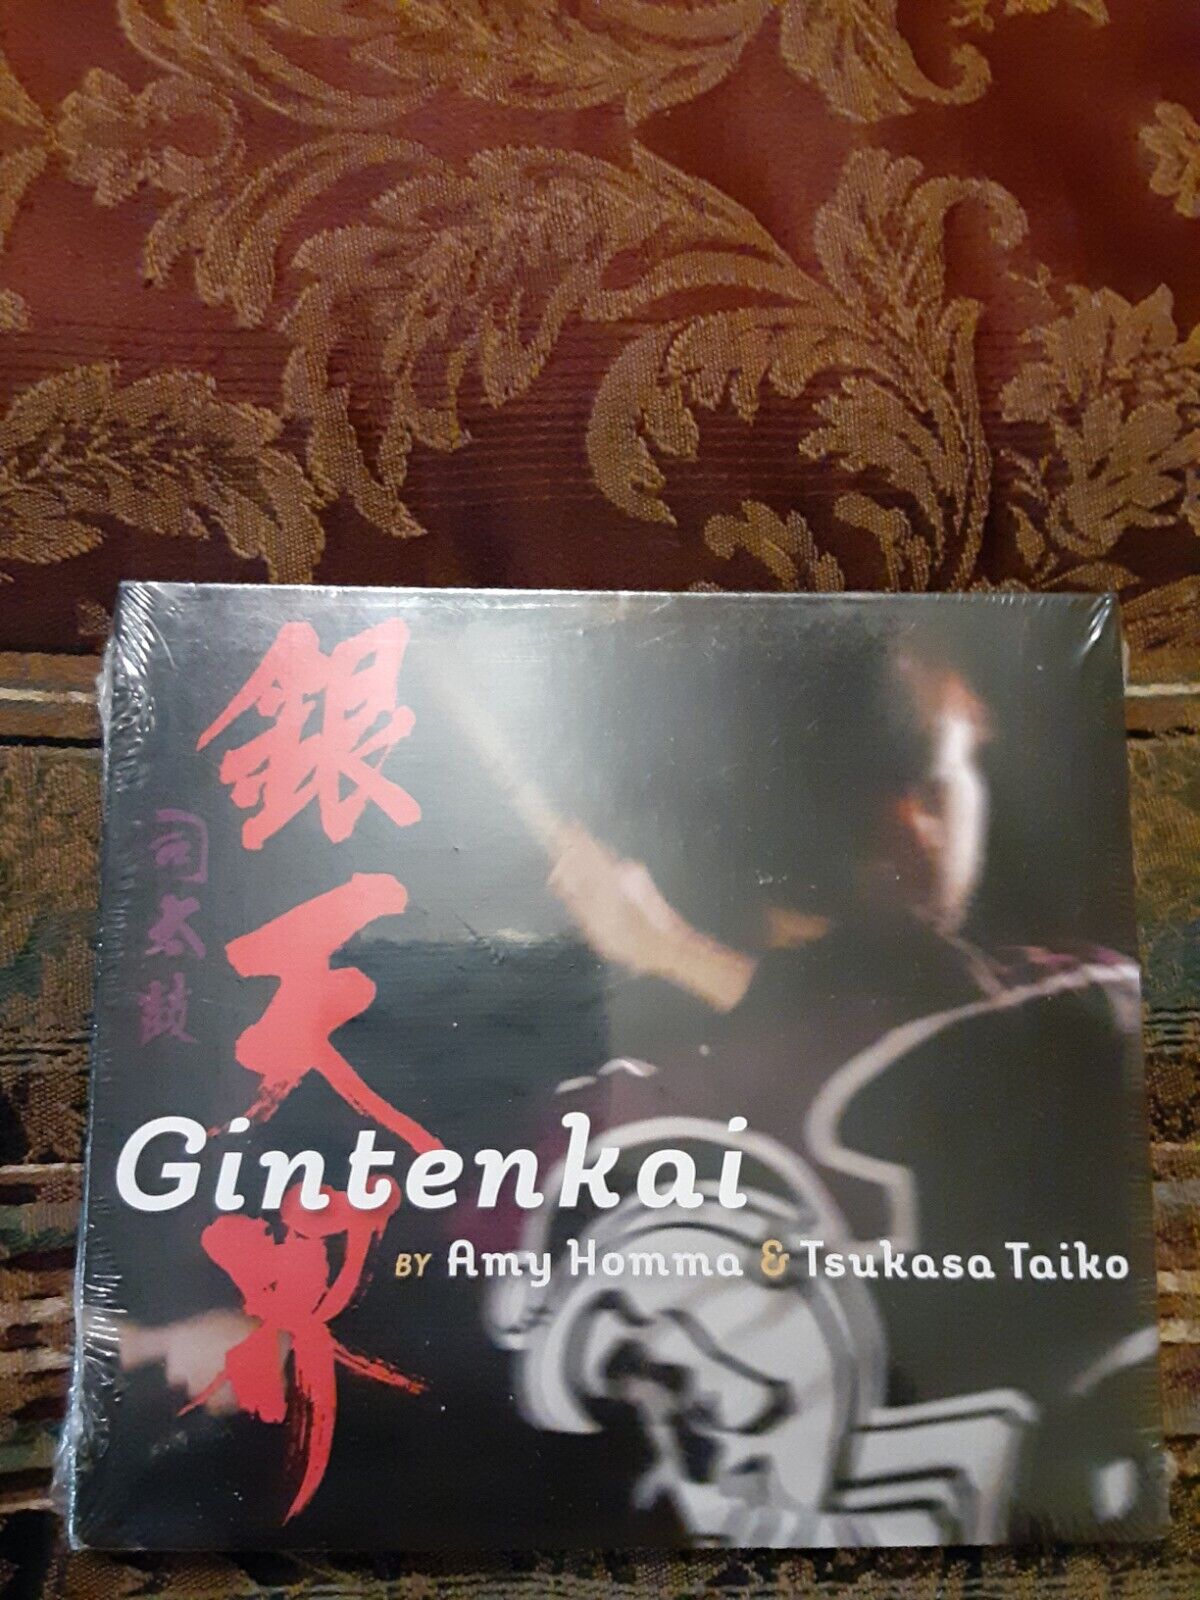 AMY HOMMA & TSUKASA TAIKO - Gintenkai - CD - Brand New Sealed In Cellophane 